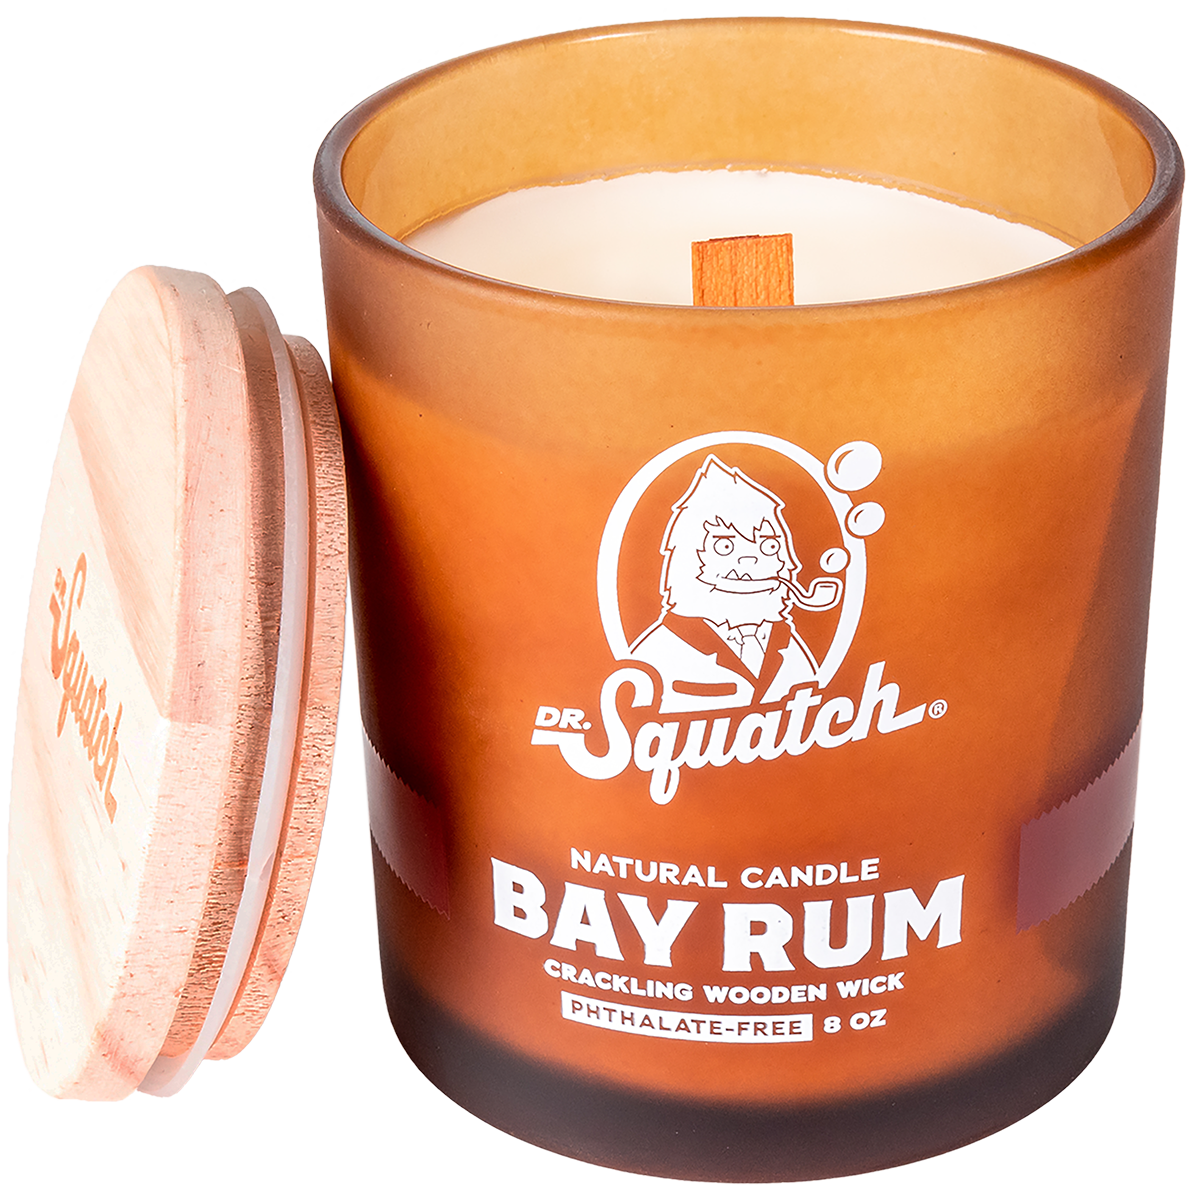 Dr. Squatch Bay Rum Soap